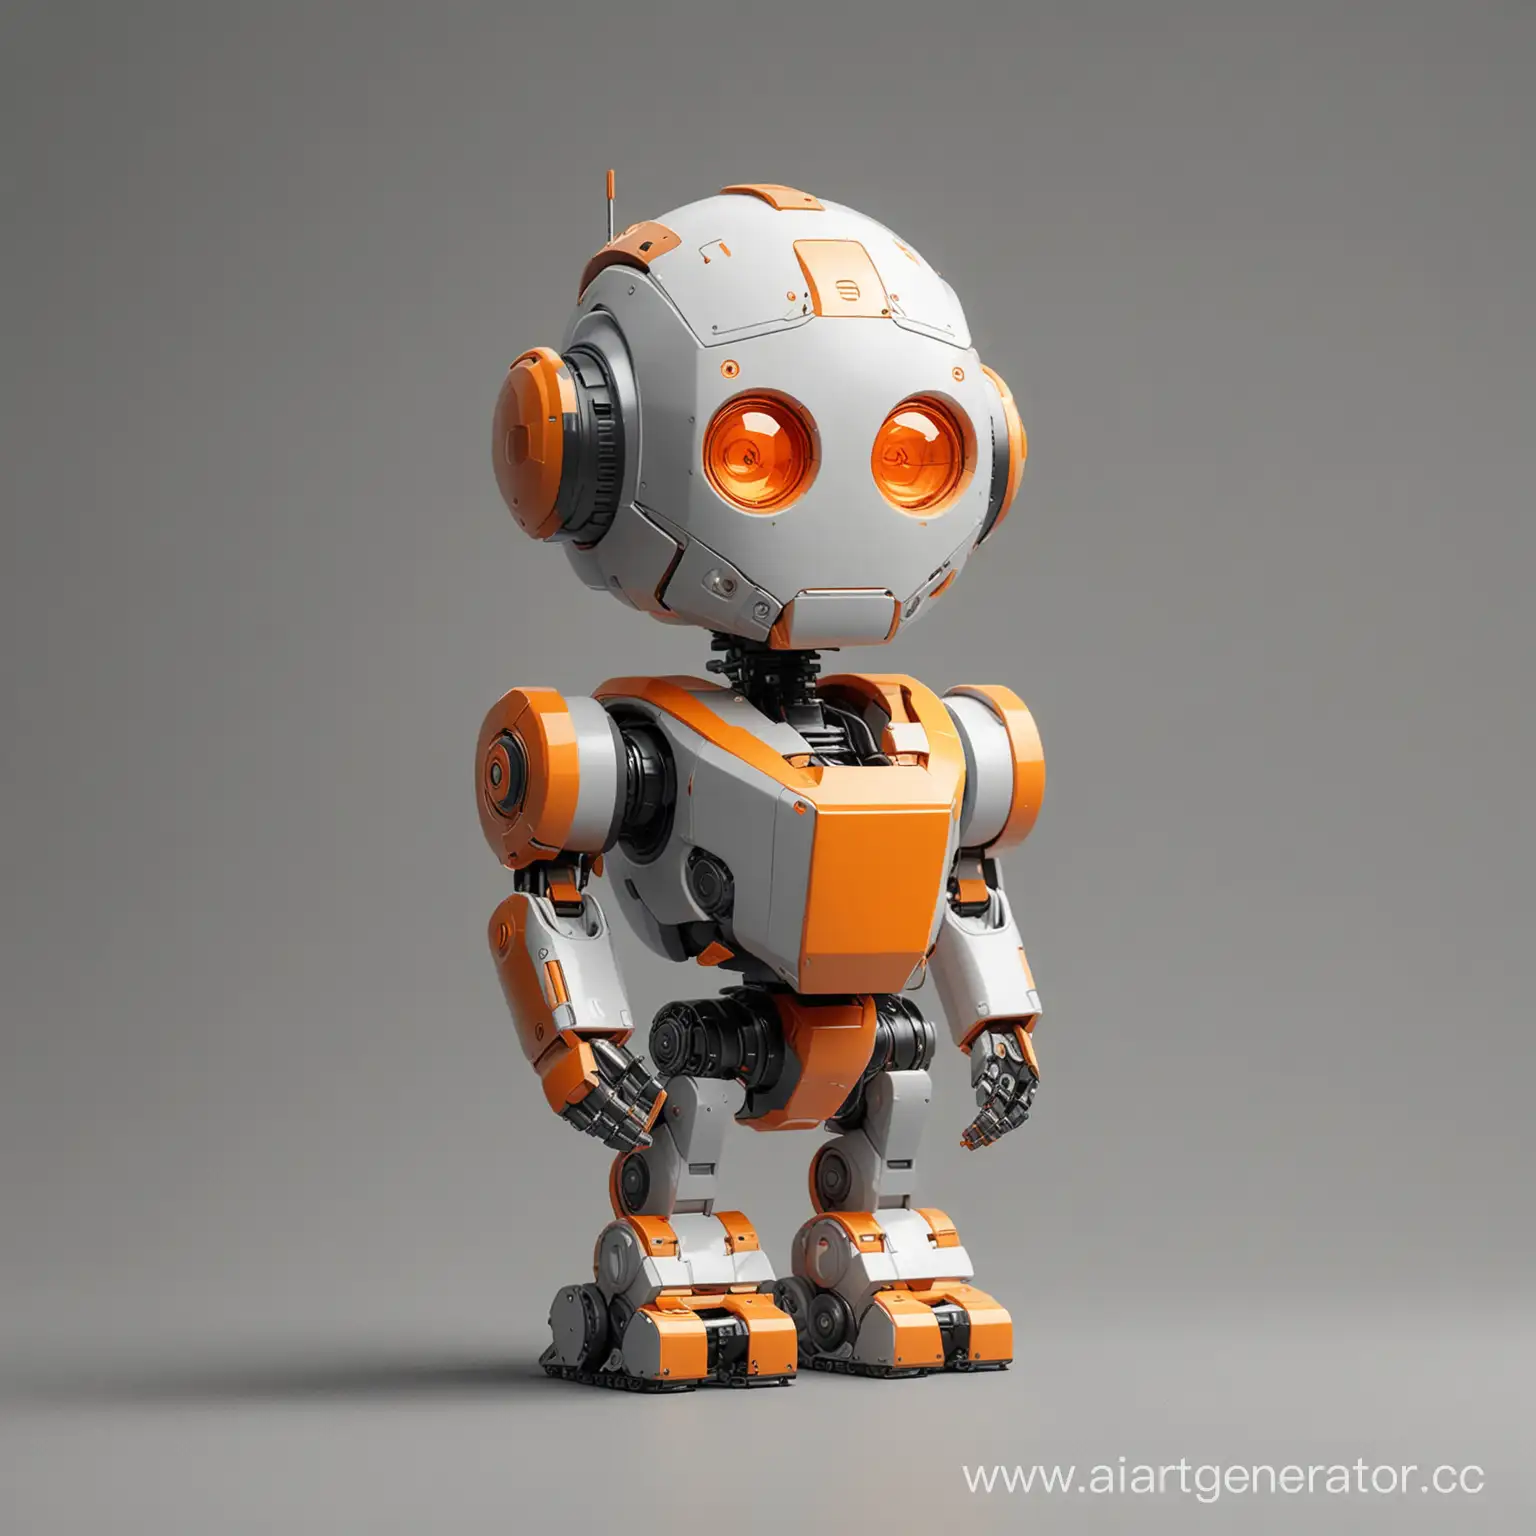 Minimalist-Bot-Art-Aesthetic-Gray-Background-with-Orange-Tones